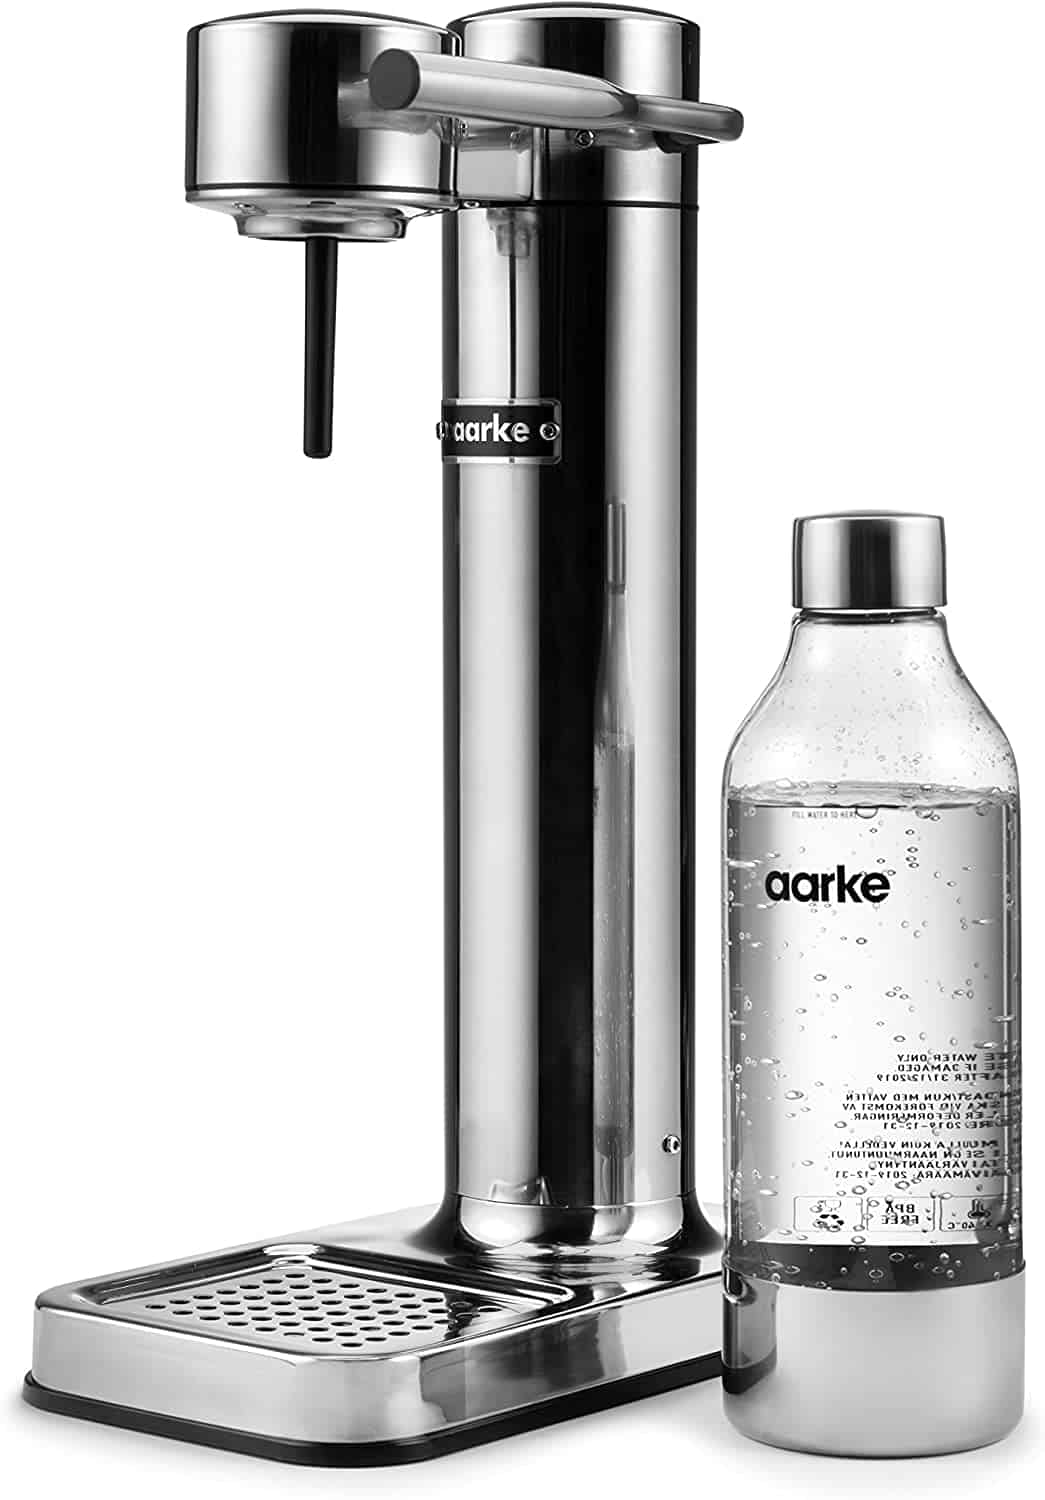 Aarke Carbonator II for Soda Water